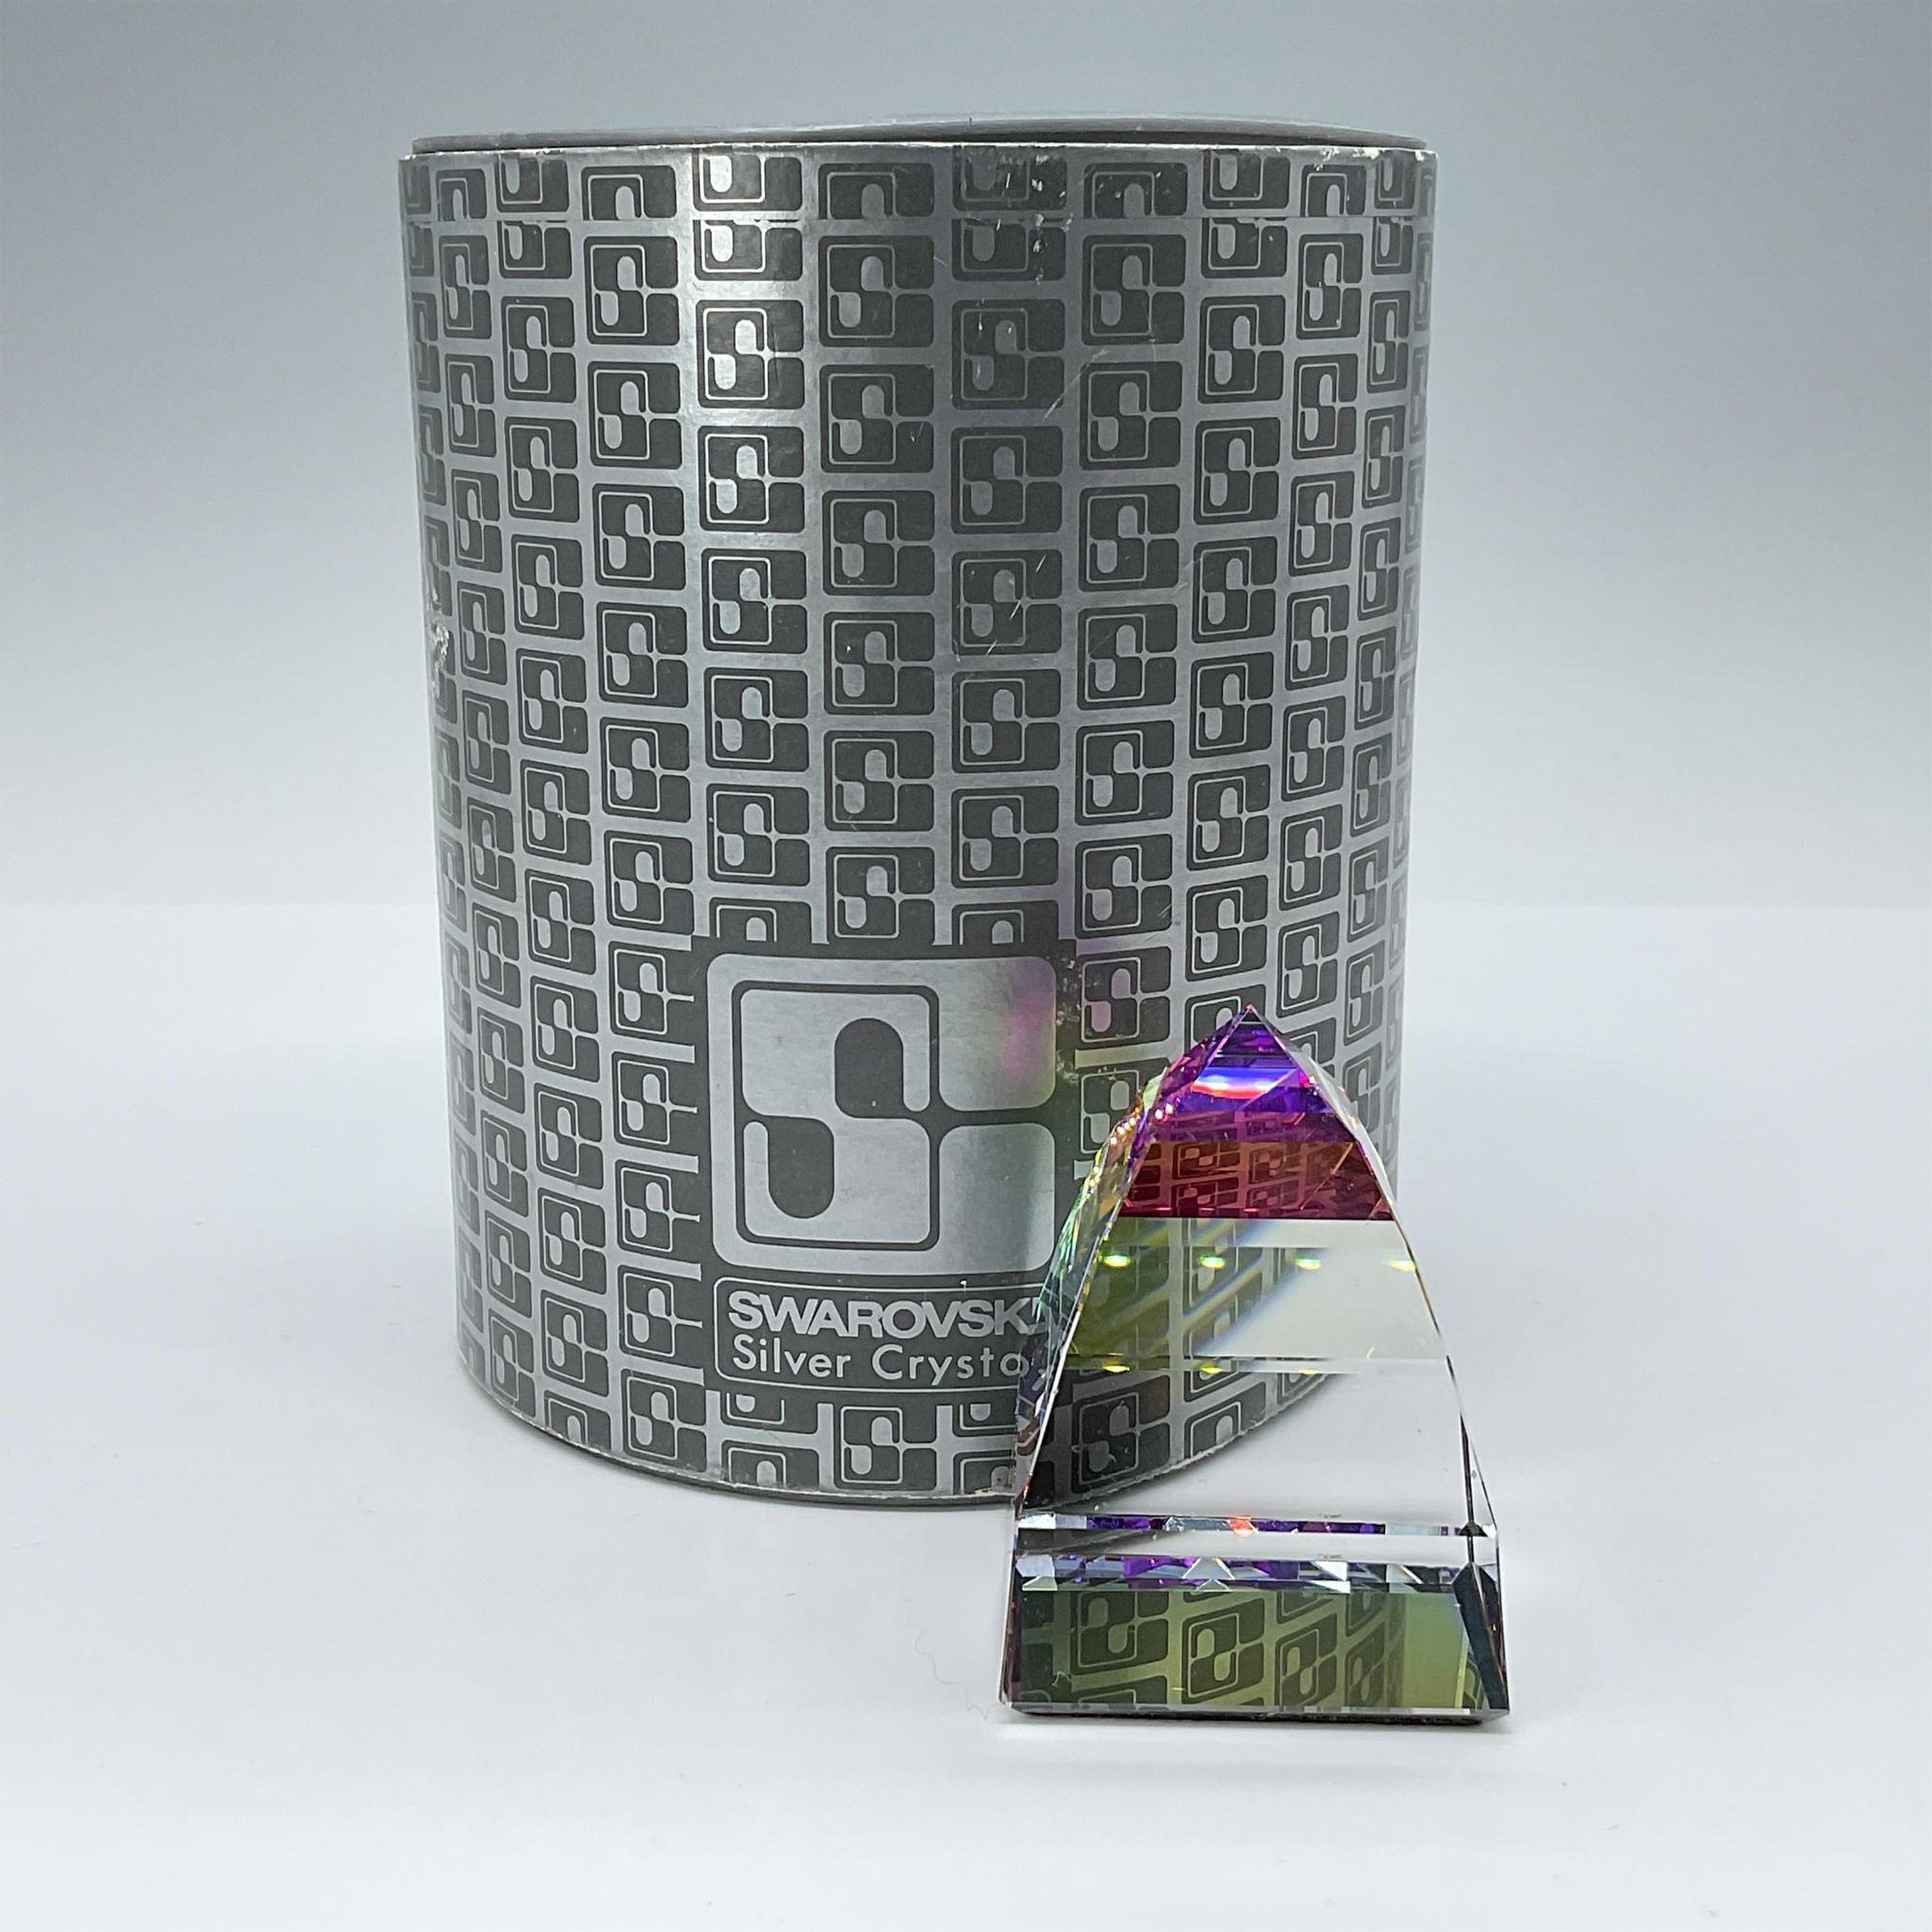 Swarovski Silver Crystal Paperweight, Pyramid Rainbow - Image 4 of 4